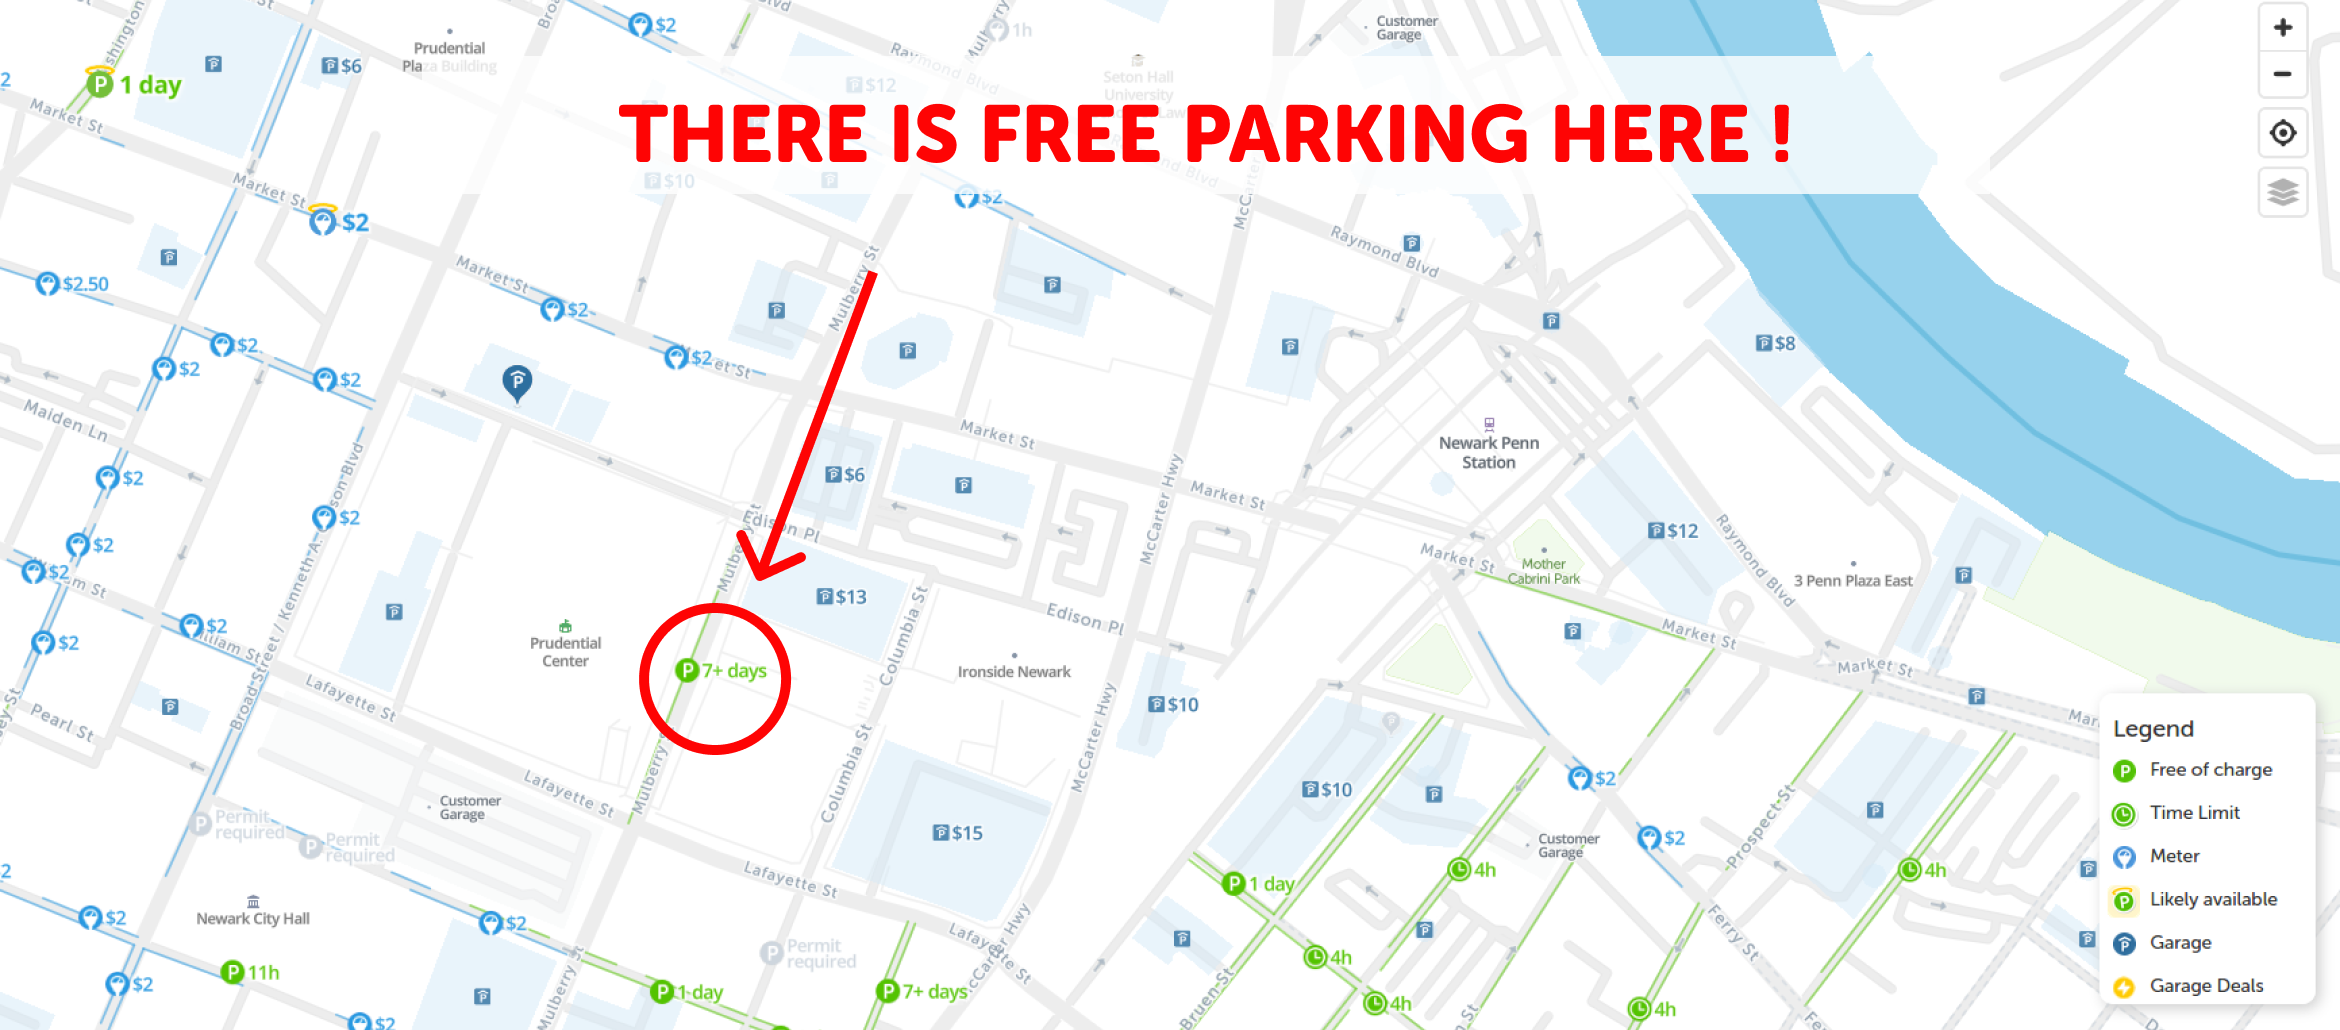 map of free parking in Newark - SpotAngels